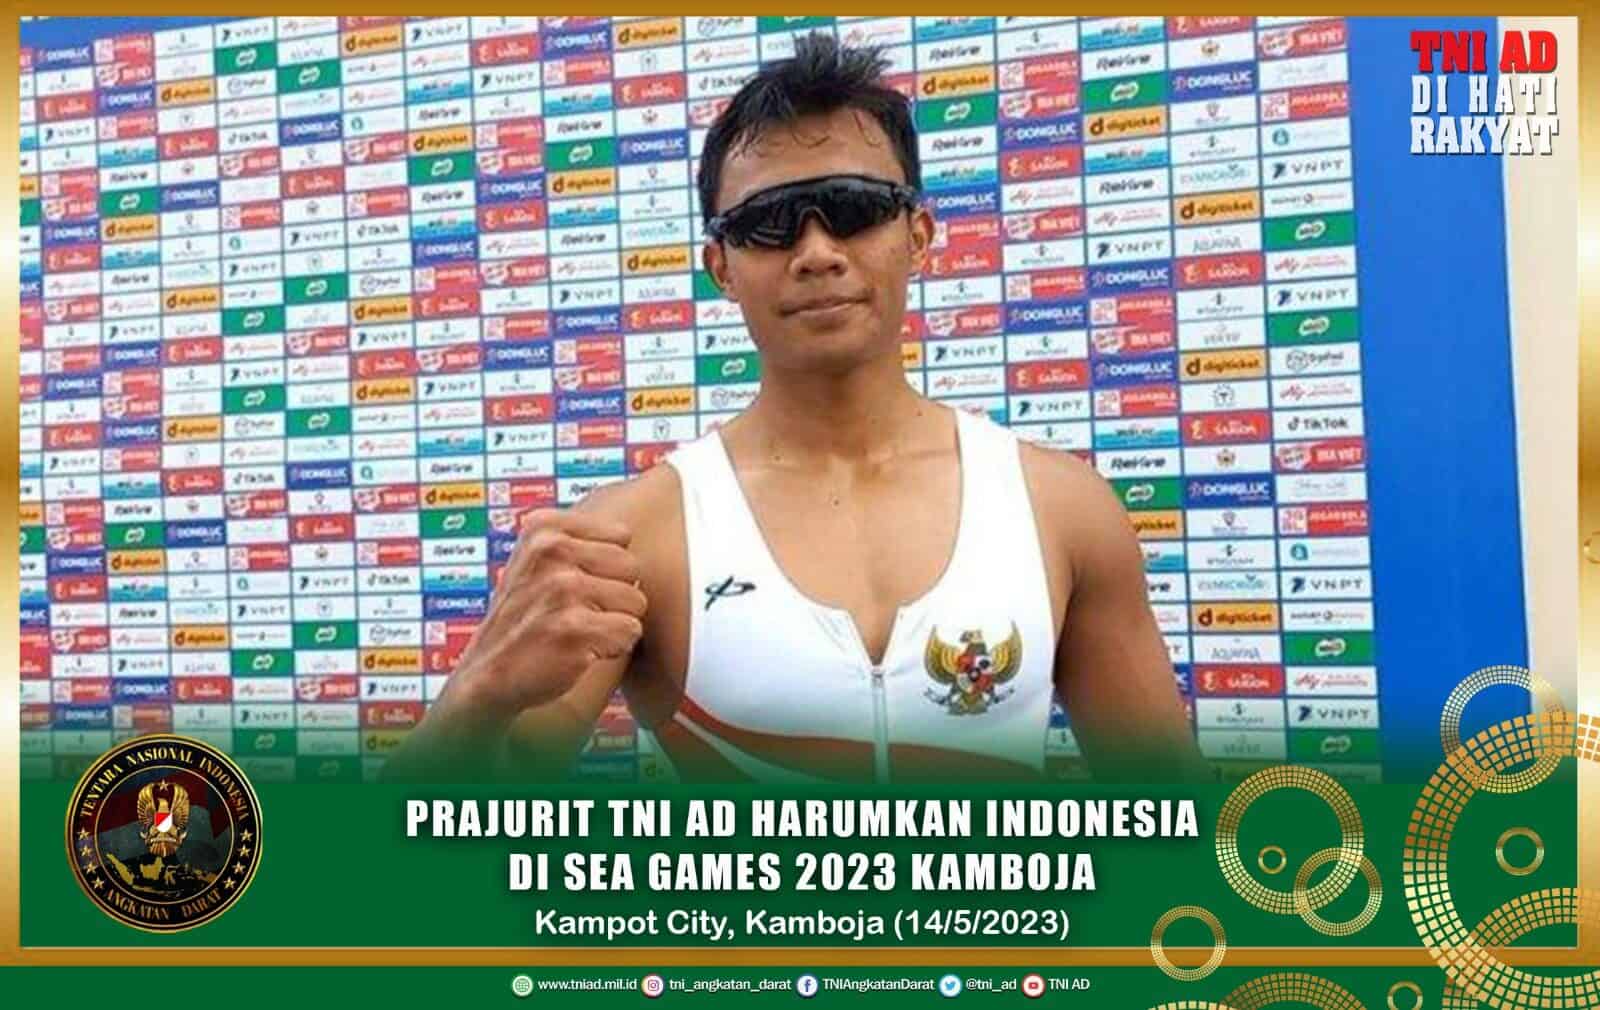 Prajurit TNI AD Harumkan Indonesia di SEA Games 2023 Kamboja